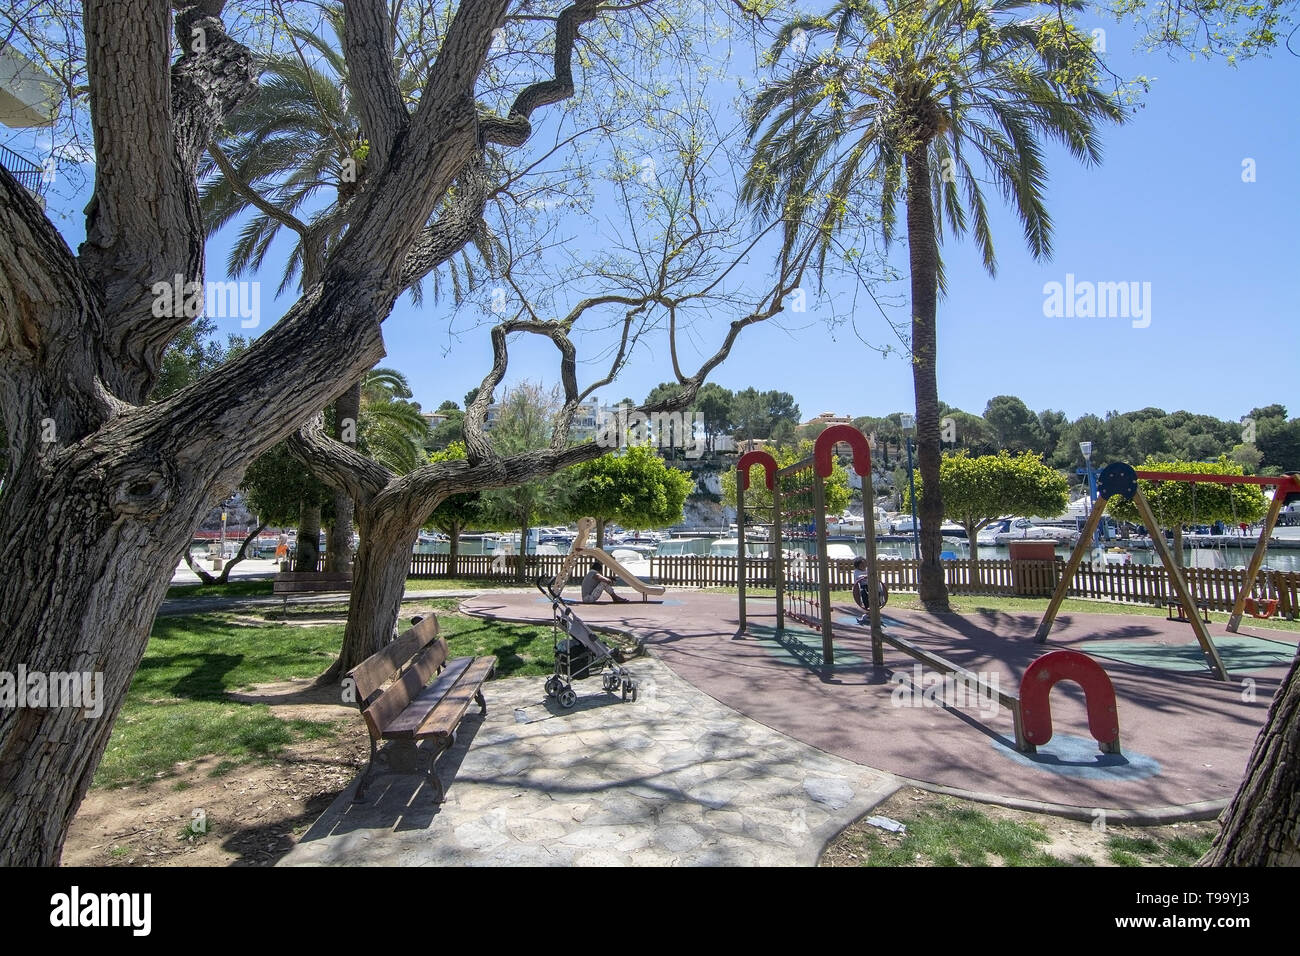 PORTO CRISTO, MALLORCA, SPAIN - MAY 16, 2019: Kids playground near the port on a sunny day on May 16, 2019 in Porto Cristo, Mallorca, Spain. Stock Photo